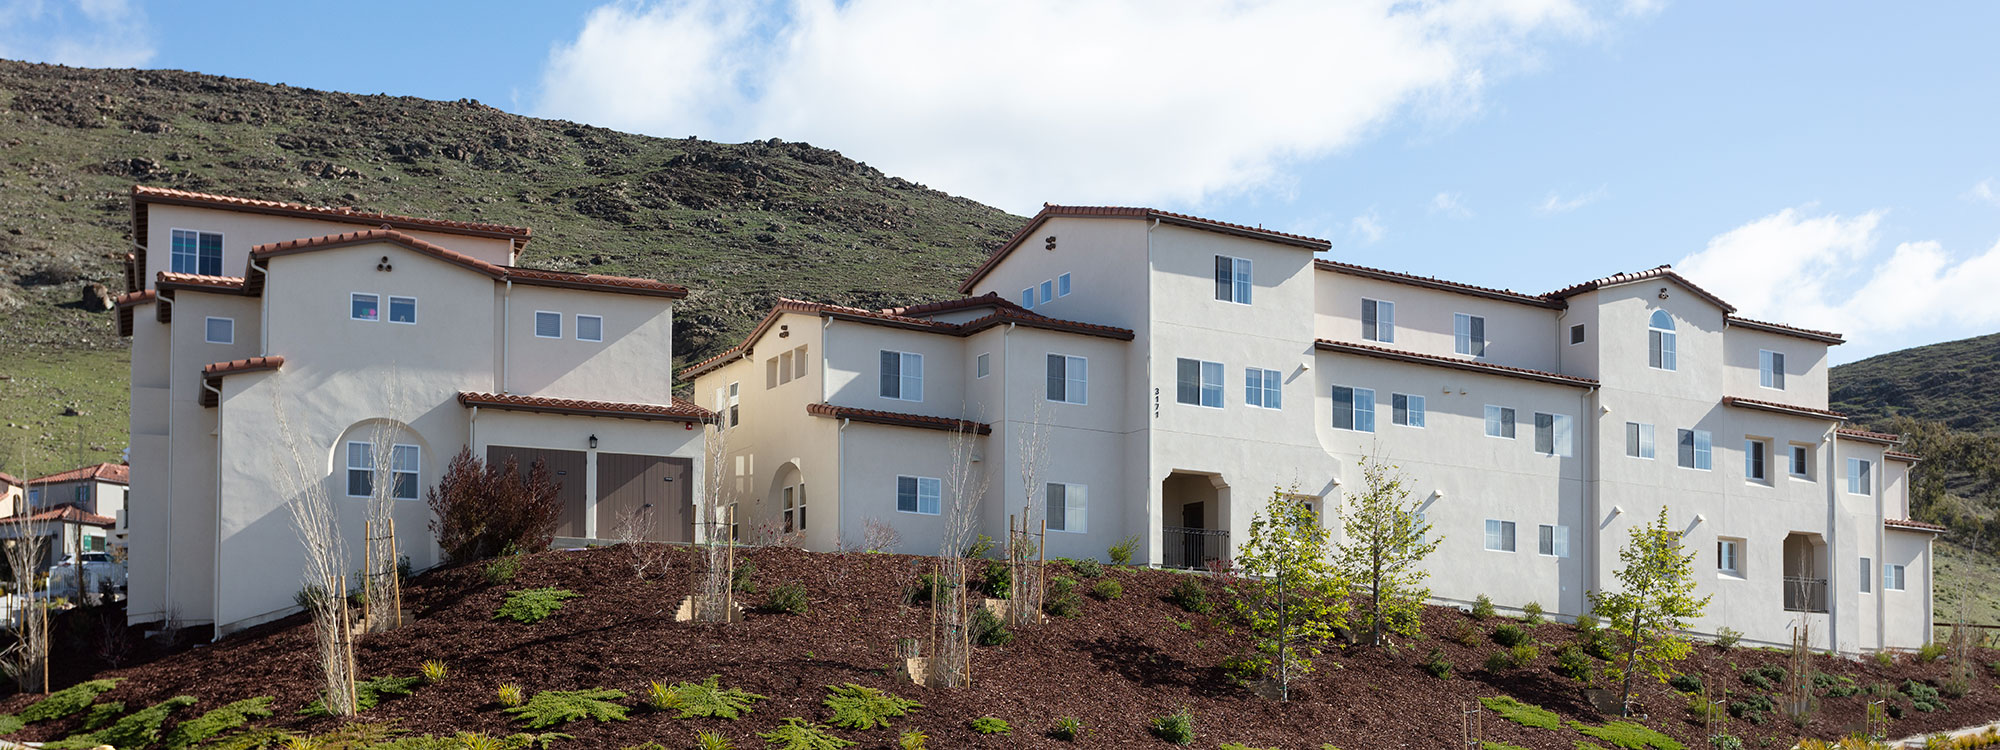 Multi-residence Builder - San Luis Obispo, CA - Low Income Housing Construction - JW Design & Construction